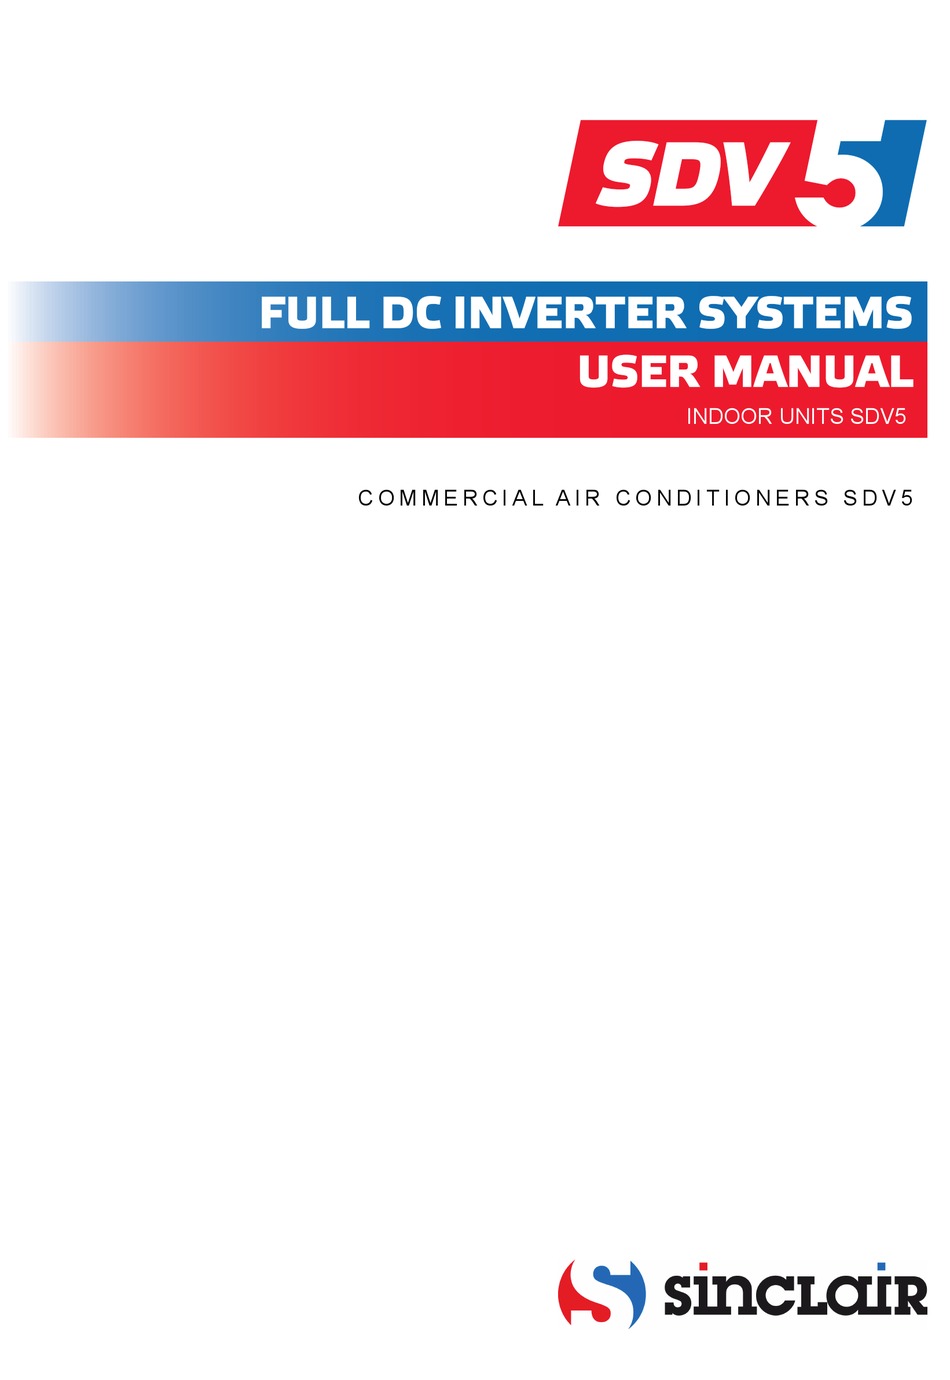 nordstar air conditioner user manual